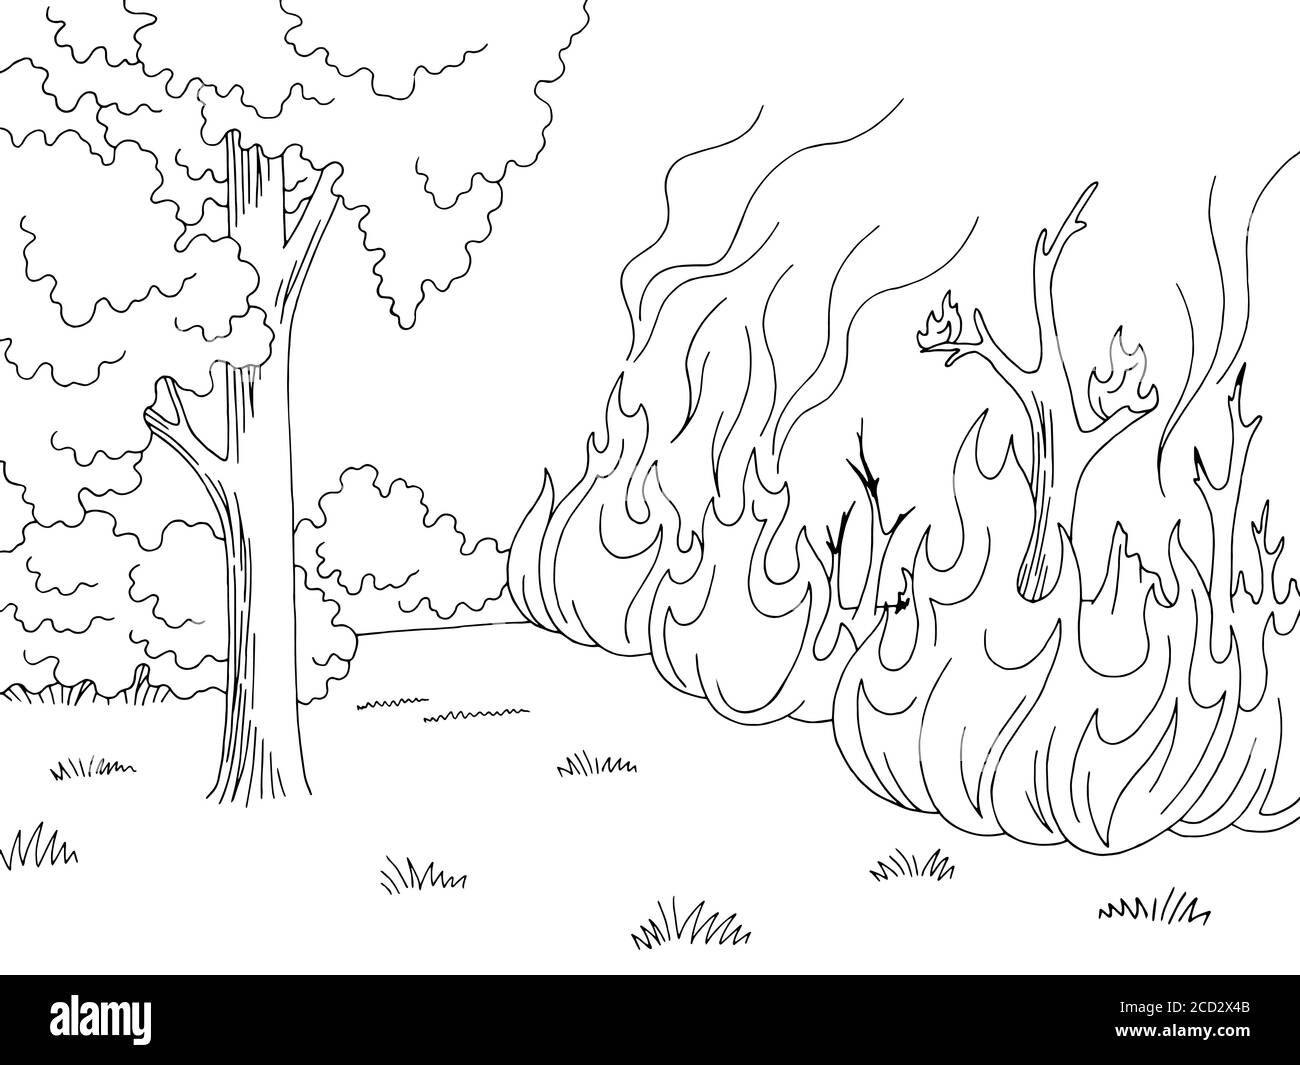 Wildfire Grafik schwarz weiß Wald Feuer Landschaft Skizze Illustration Vektor Stock Vektor